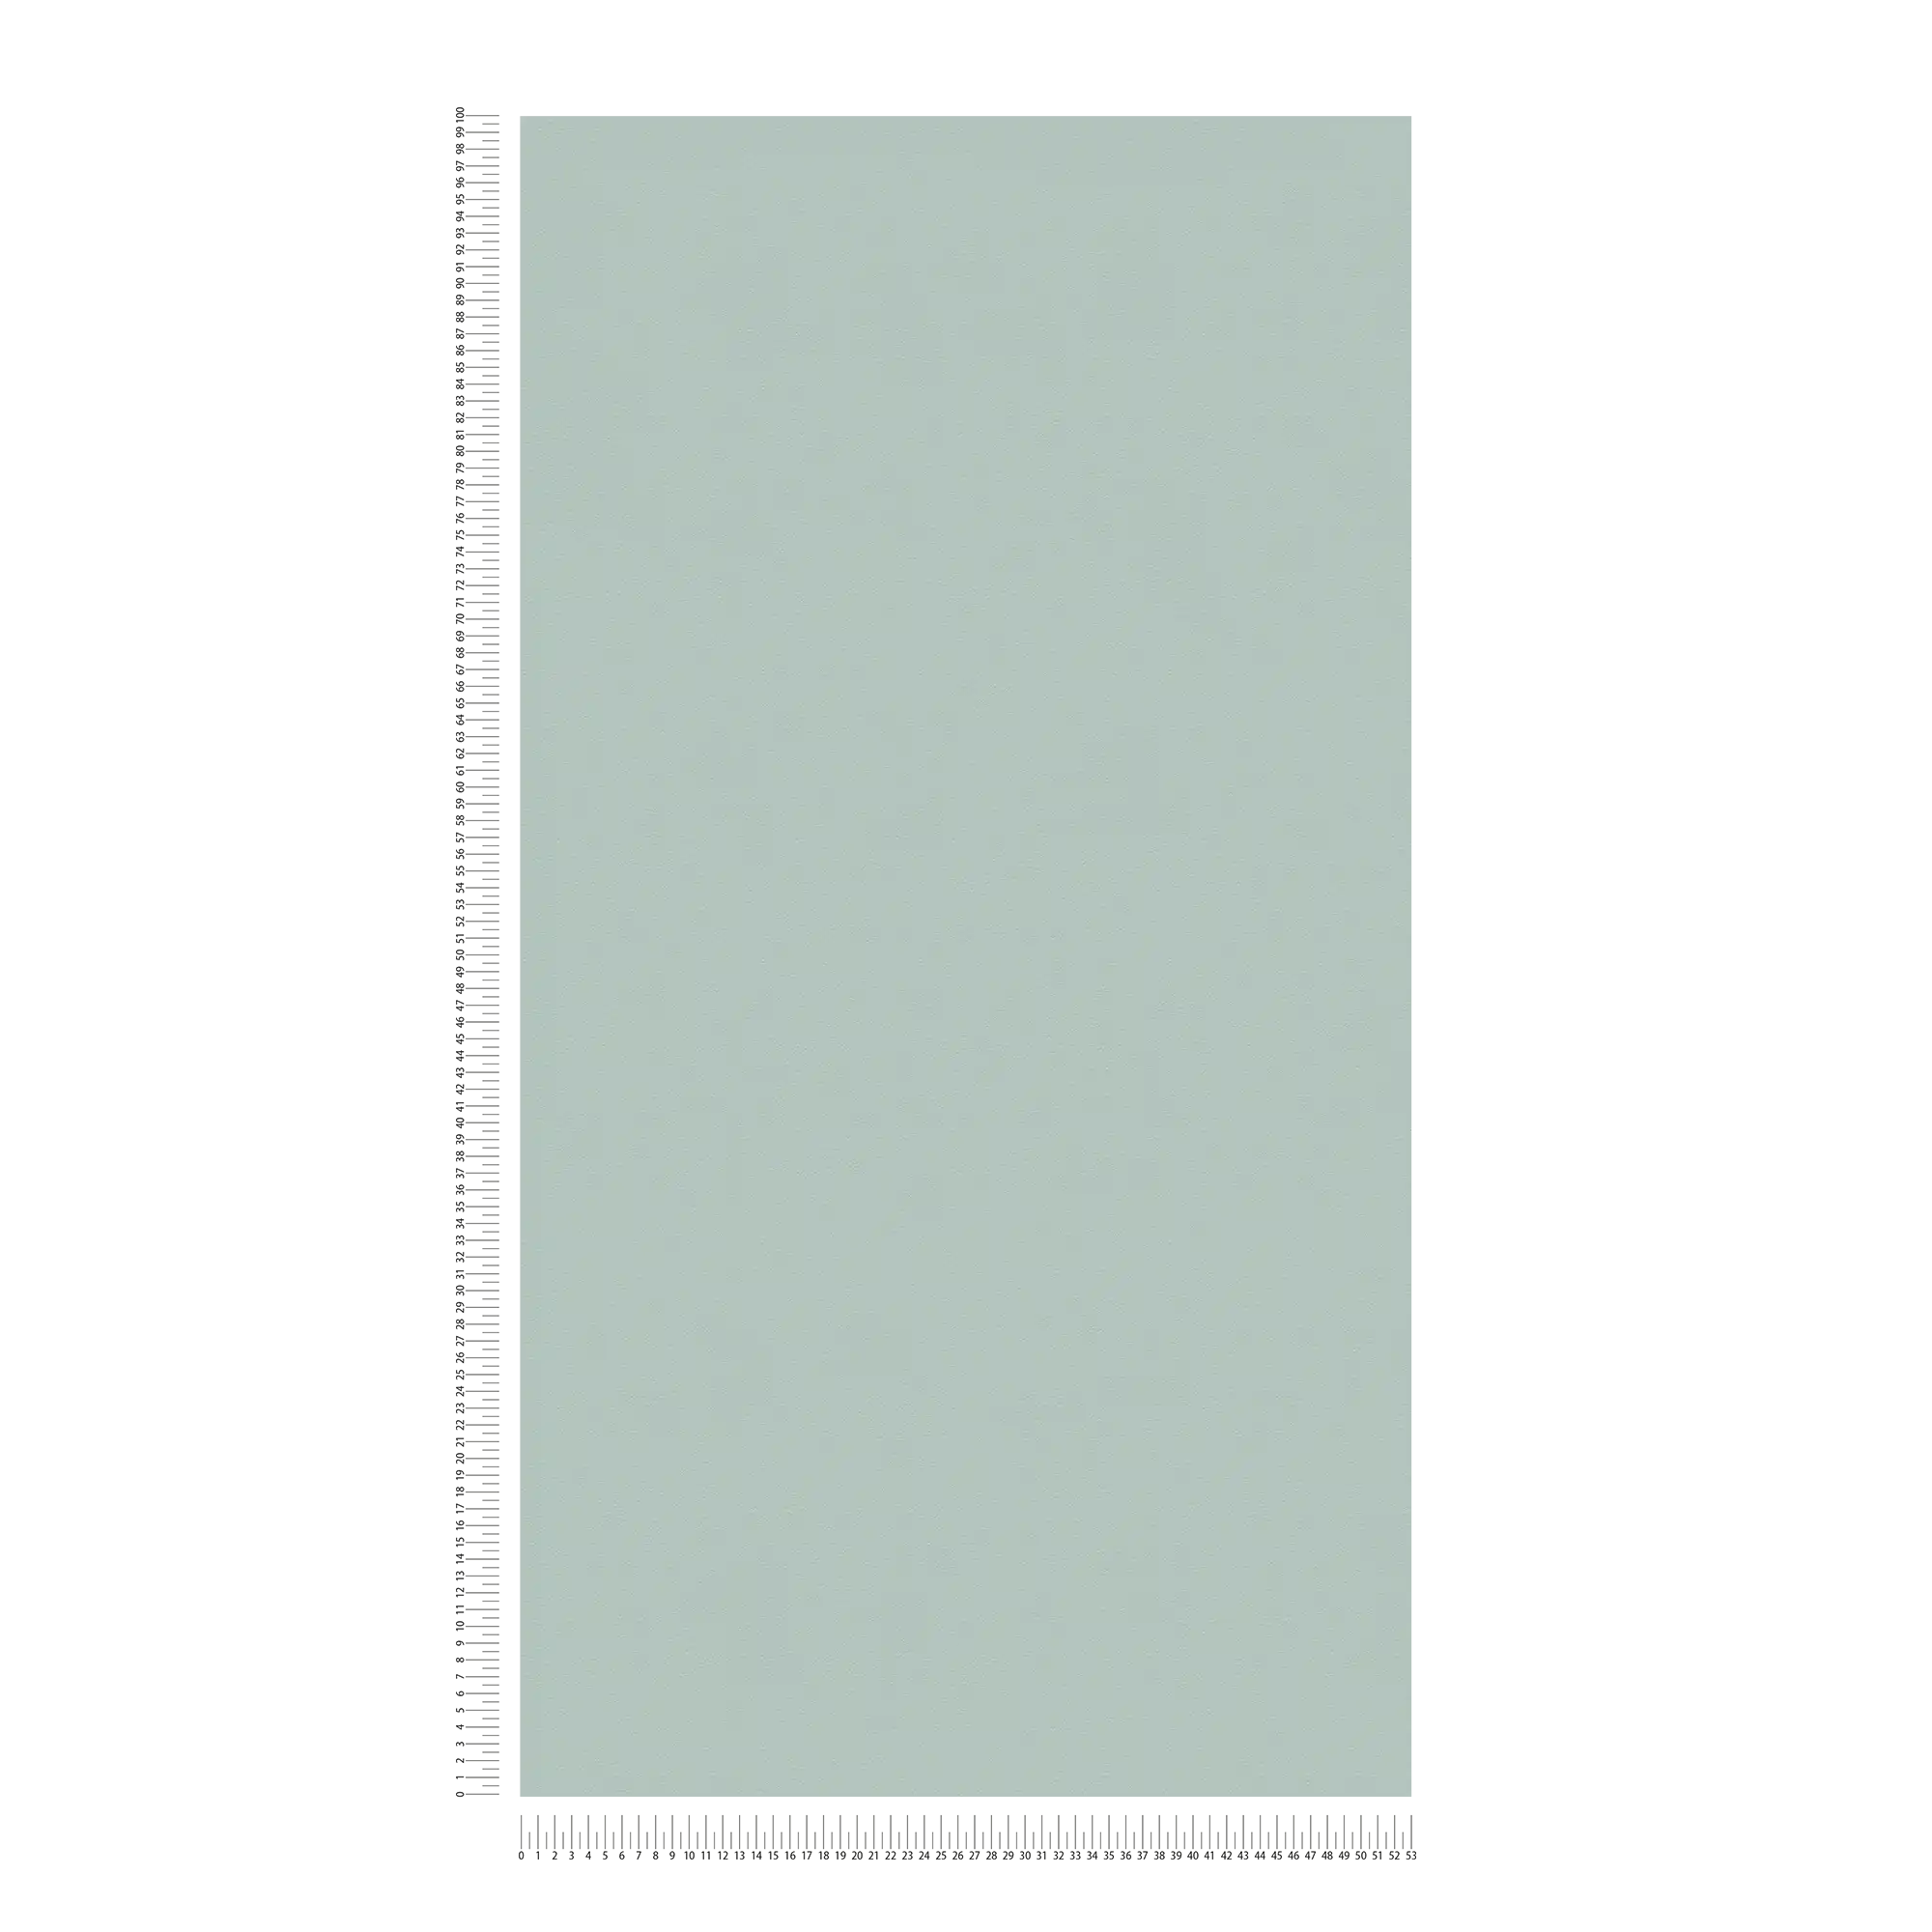             Carta da parati liscia con struttura discreta in look tessile - verde
        